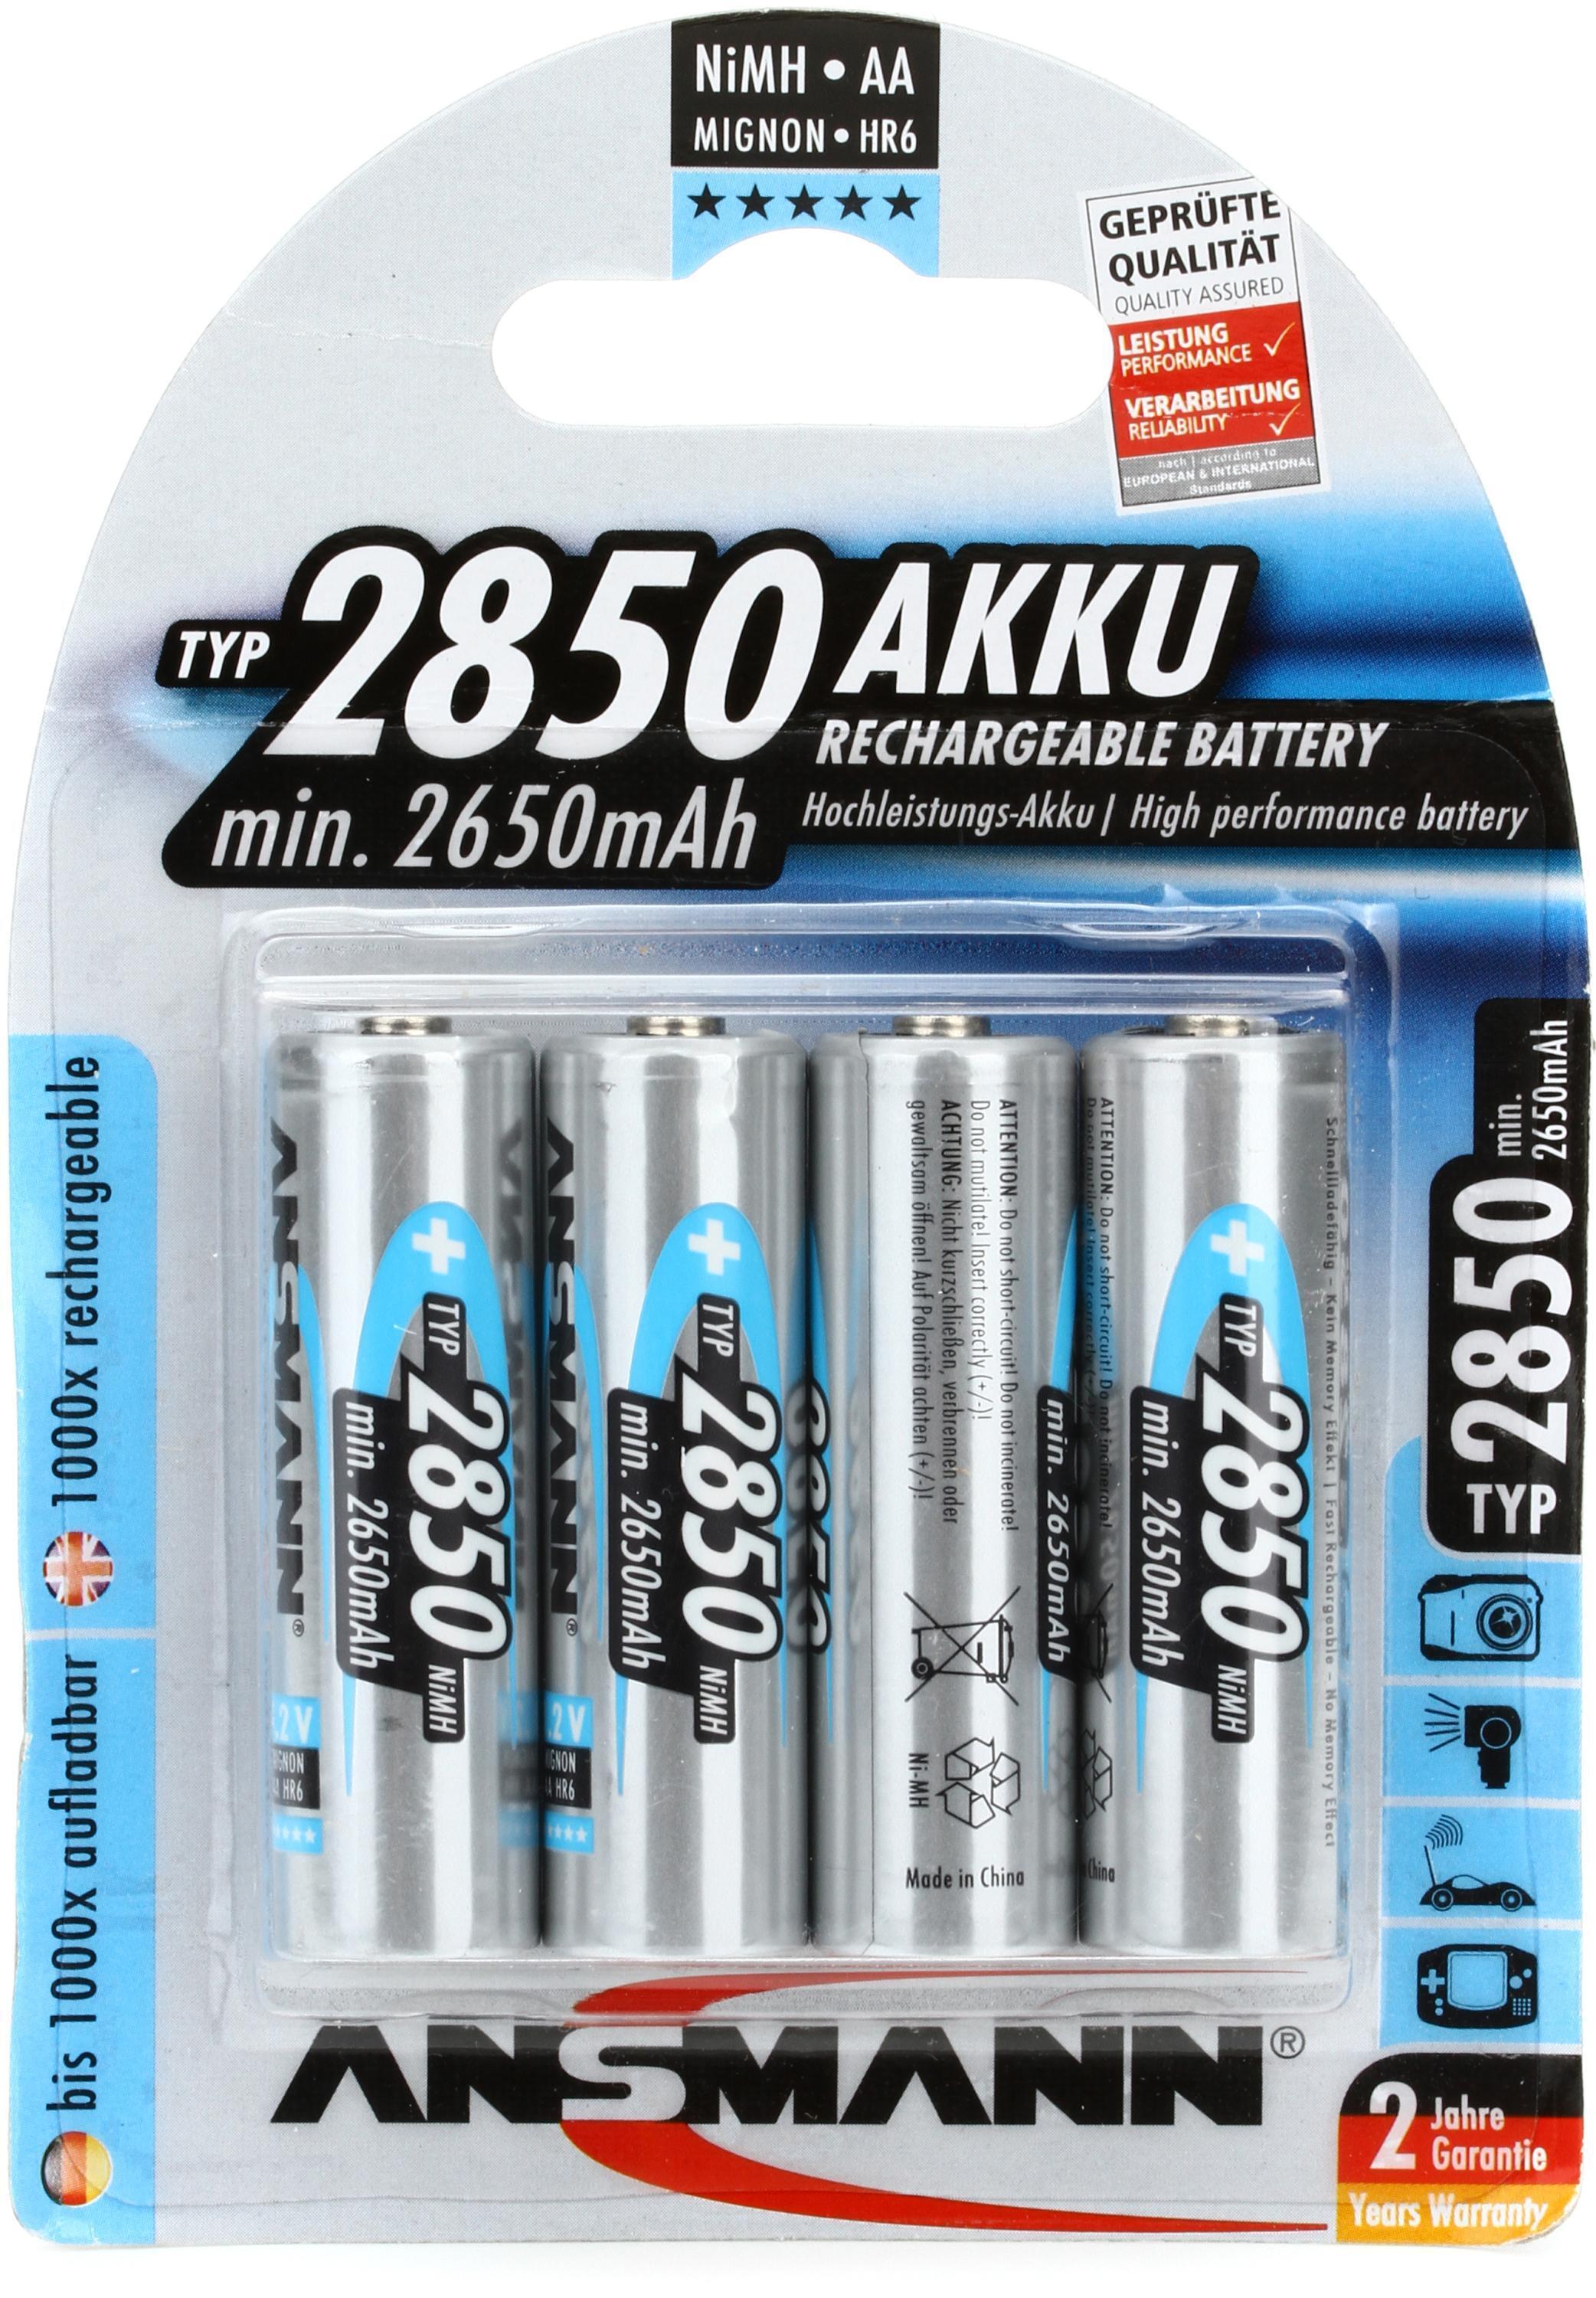 Bundled Item: Ansmann AA 2850mah Rechargeable NiMH Battery (4-pack)